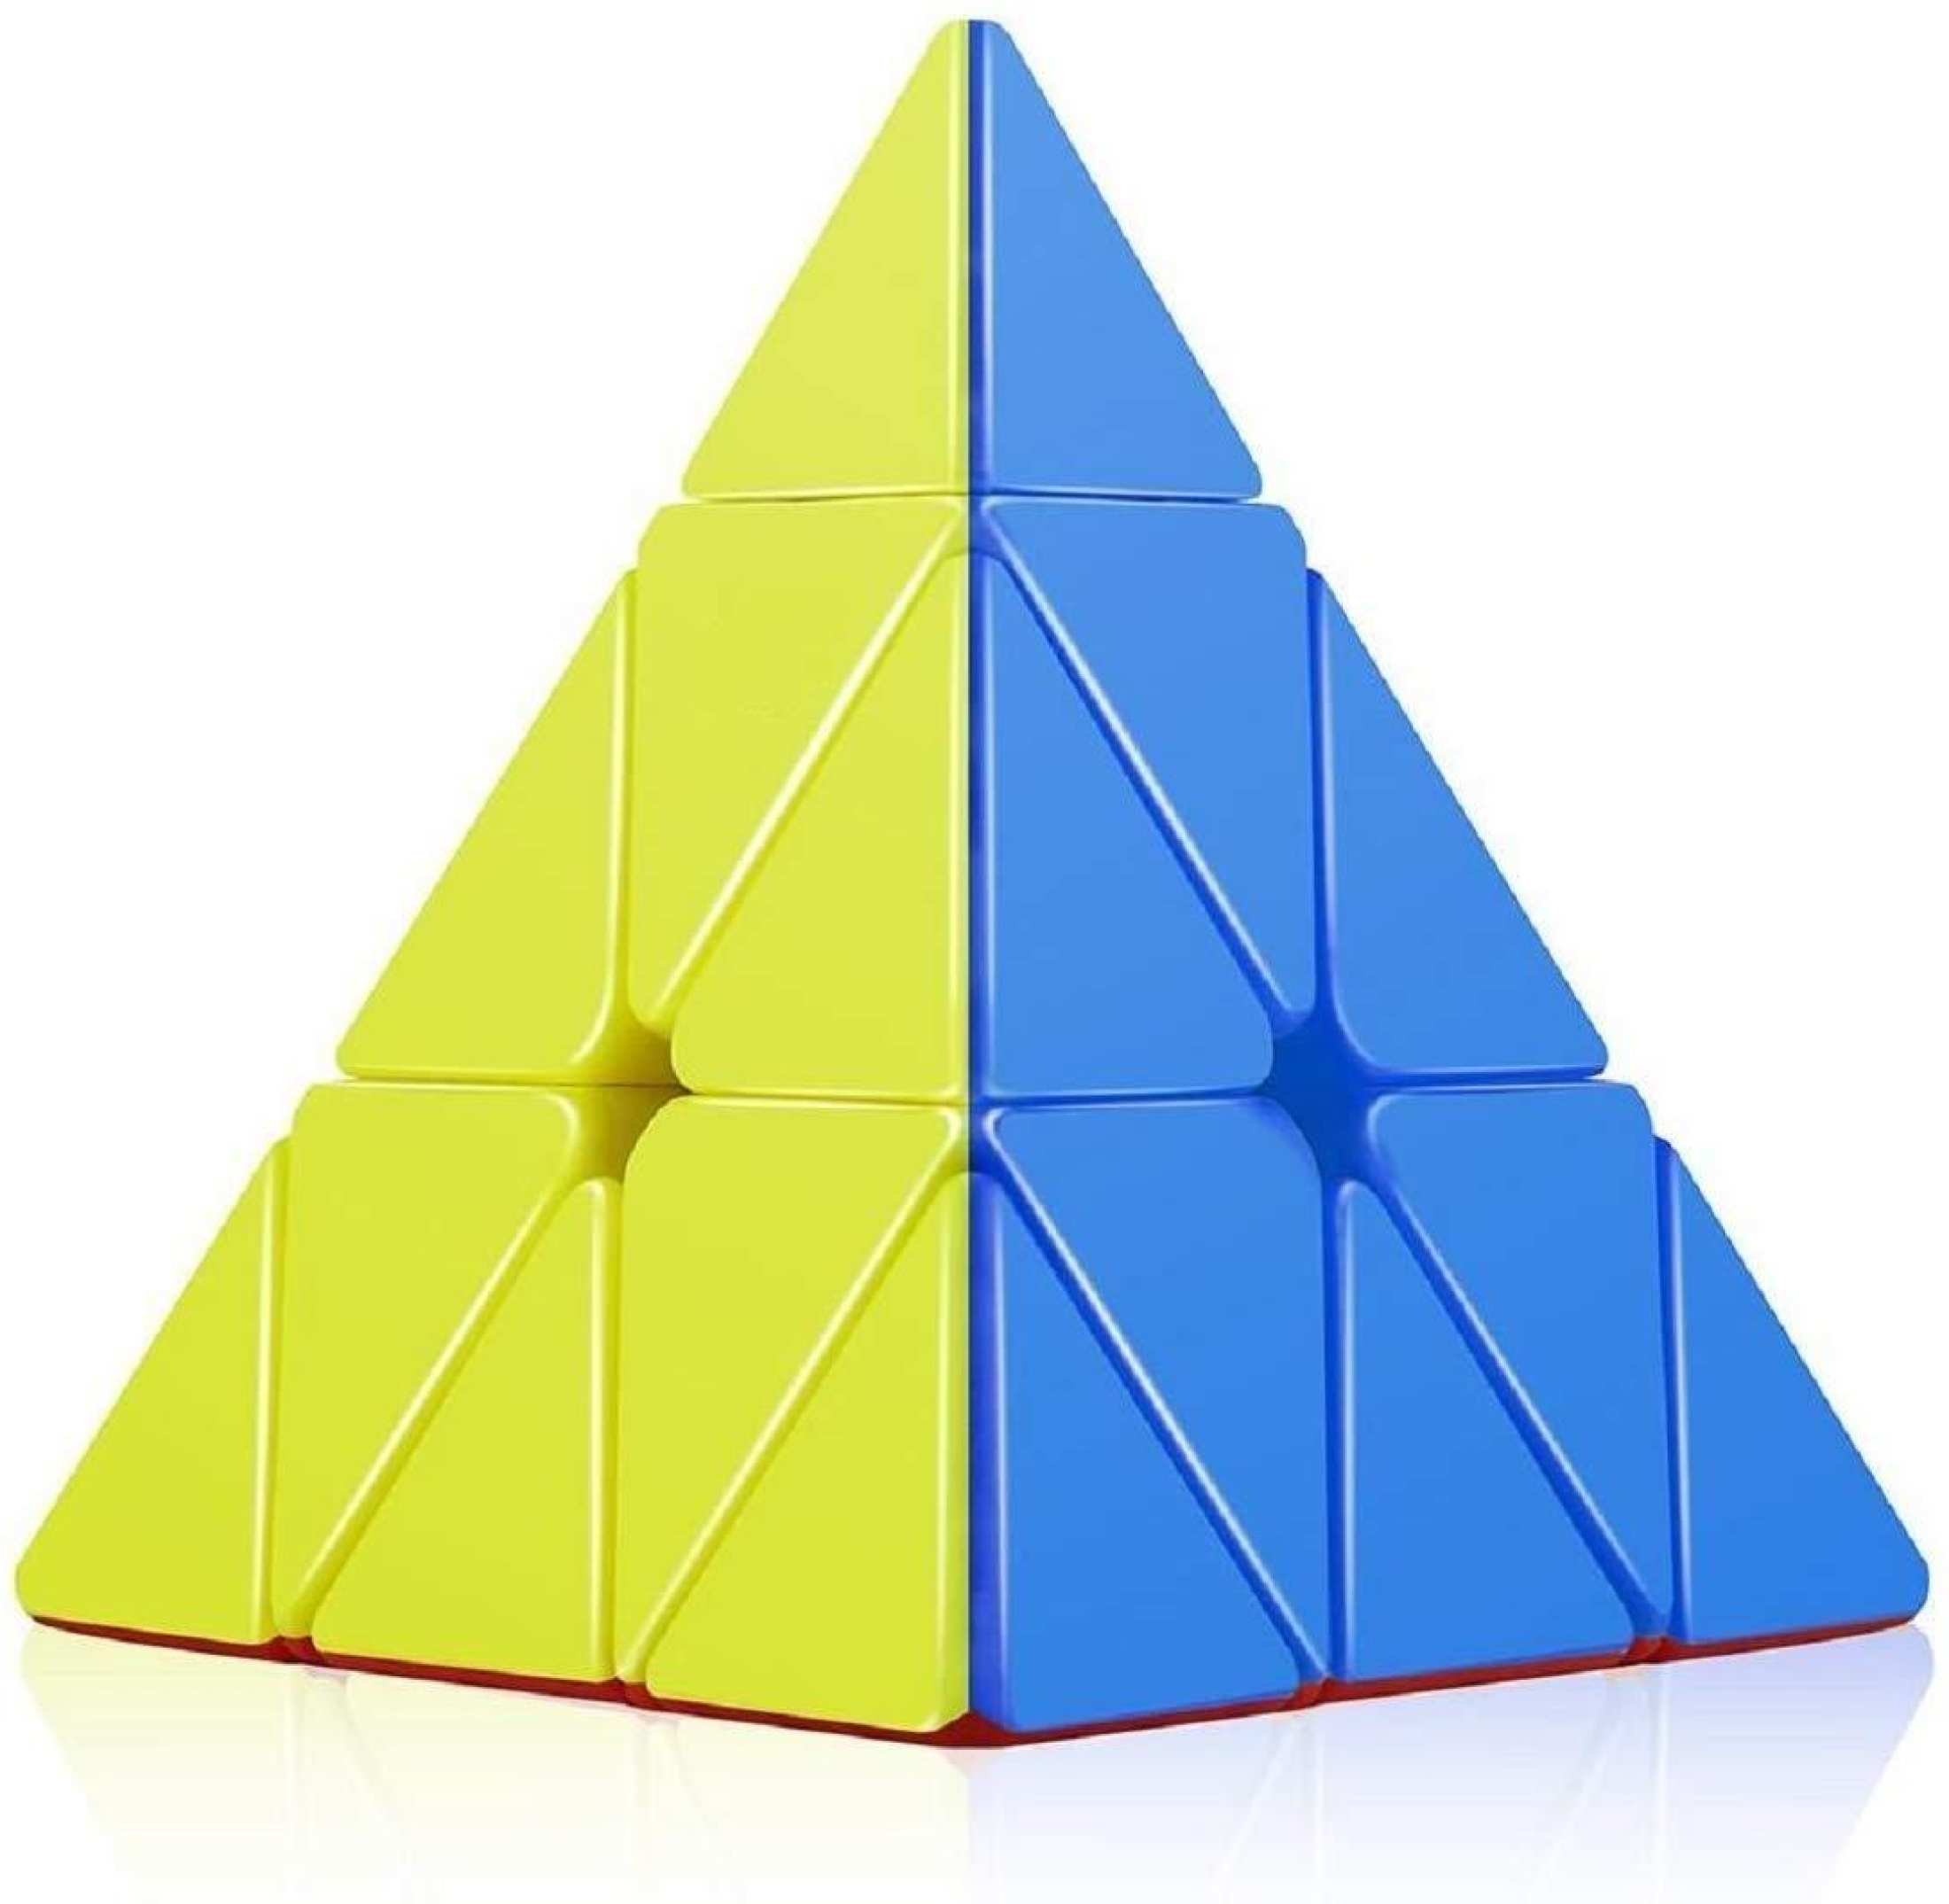 Original Three by Three Speed Pyramid Cube, Triangle, and Puzzle Design